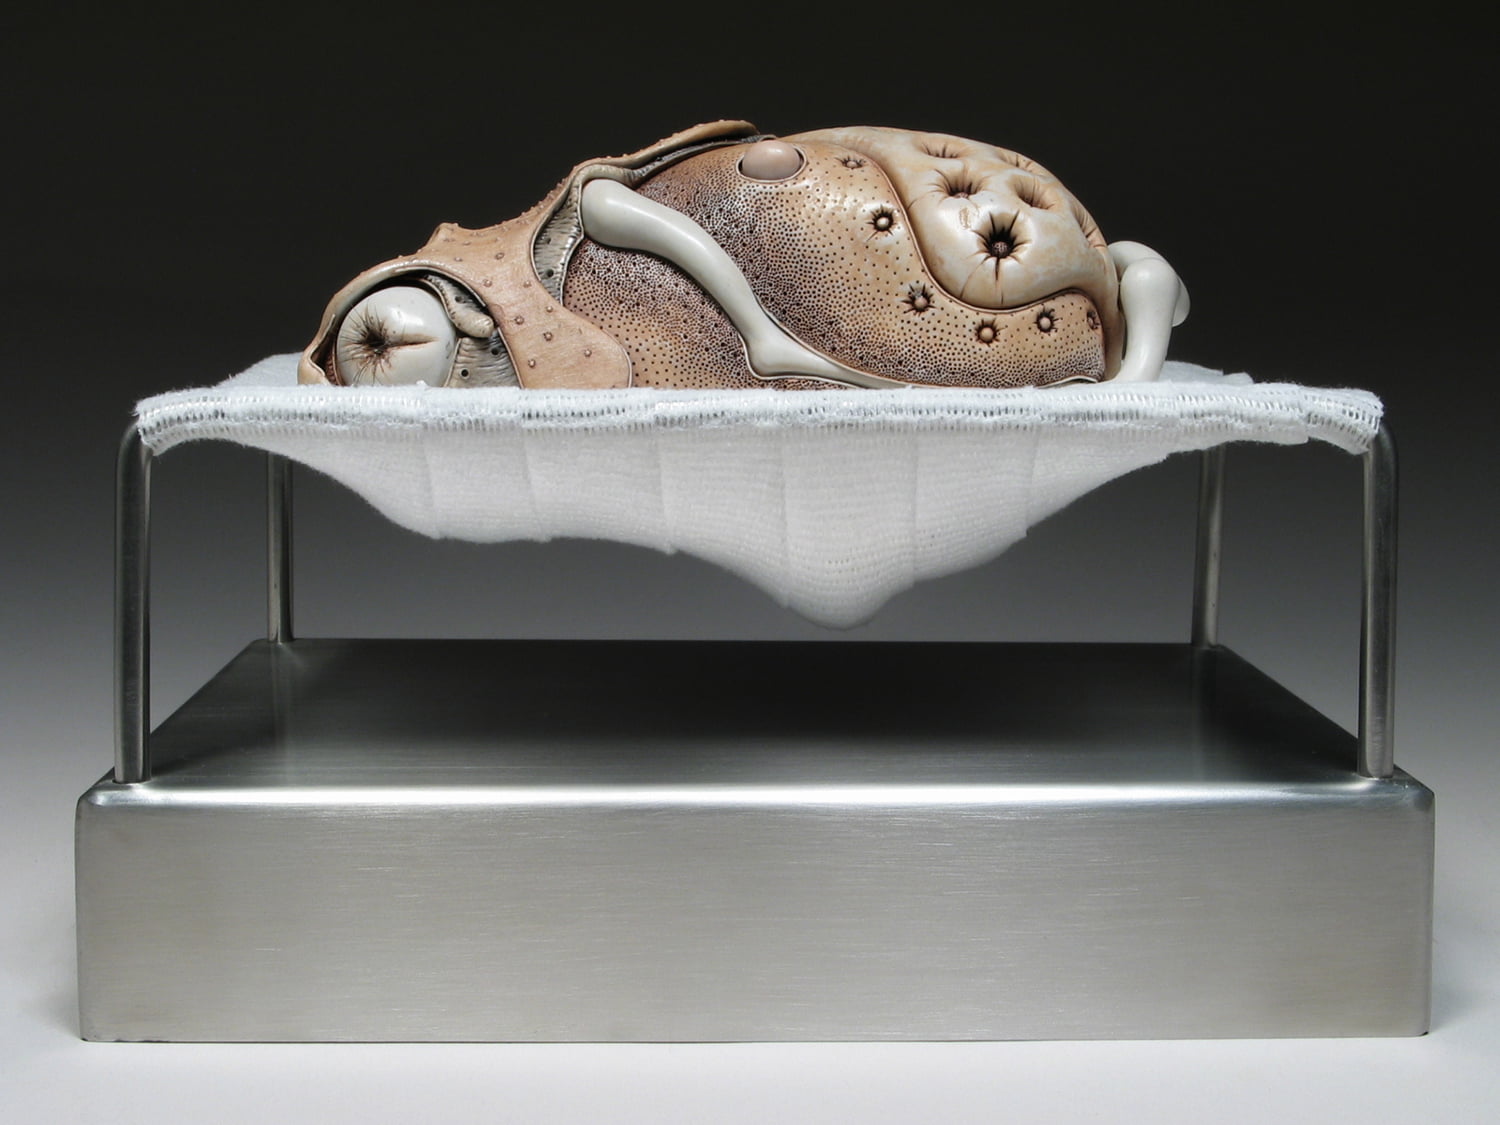 Jason Briggs "Push" (full view). Porcelain, hair, and mixed media. Sculptural ceramic art object.